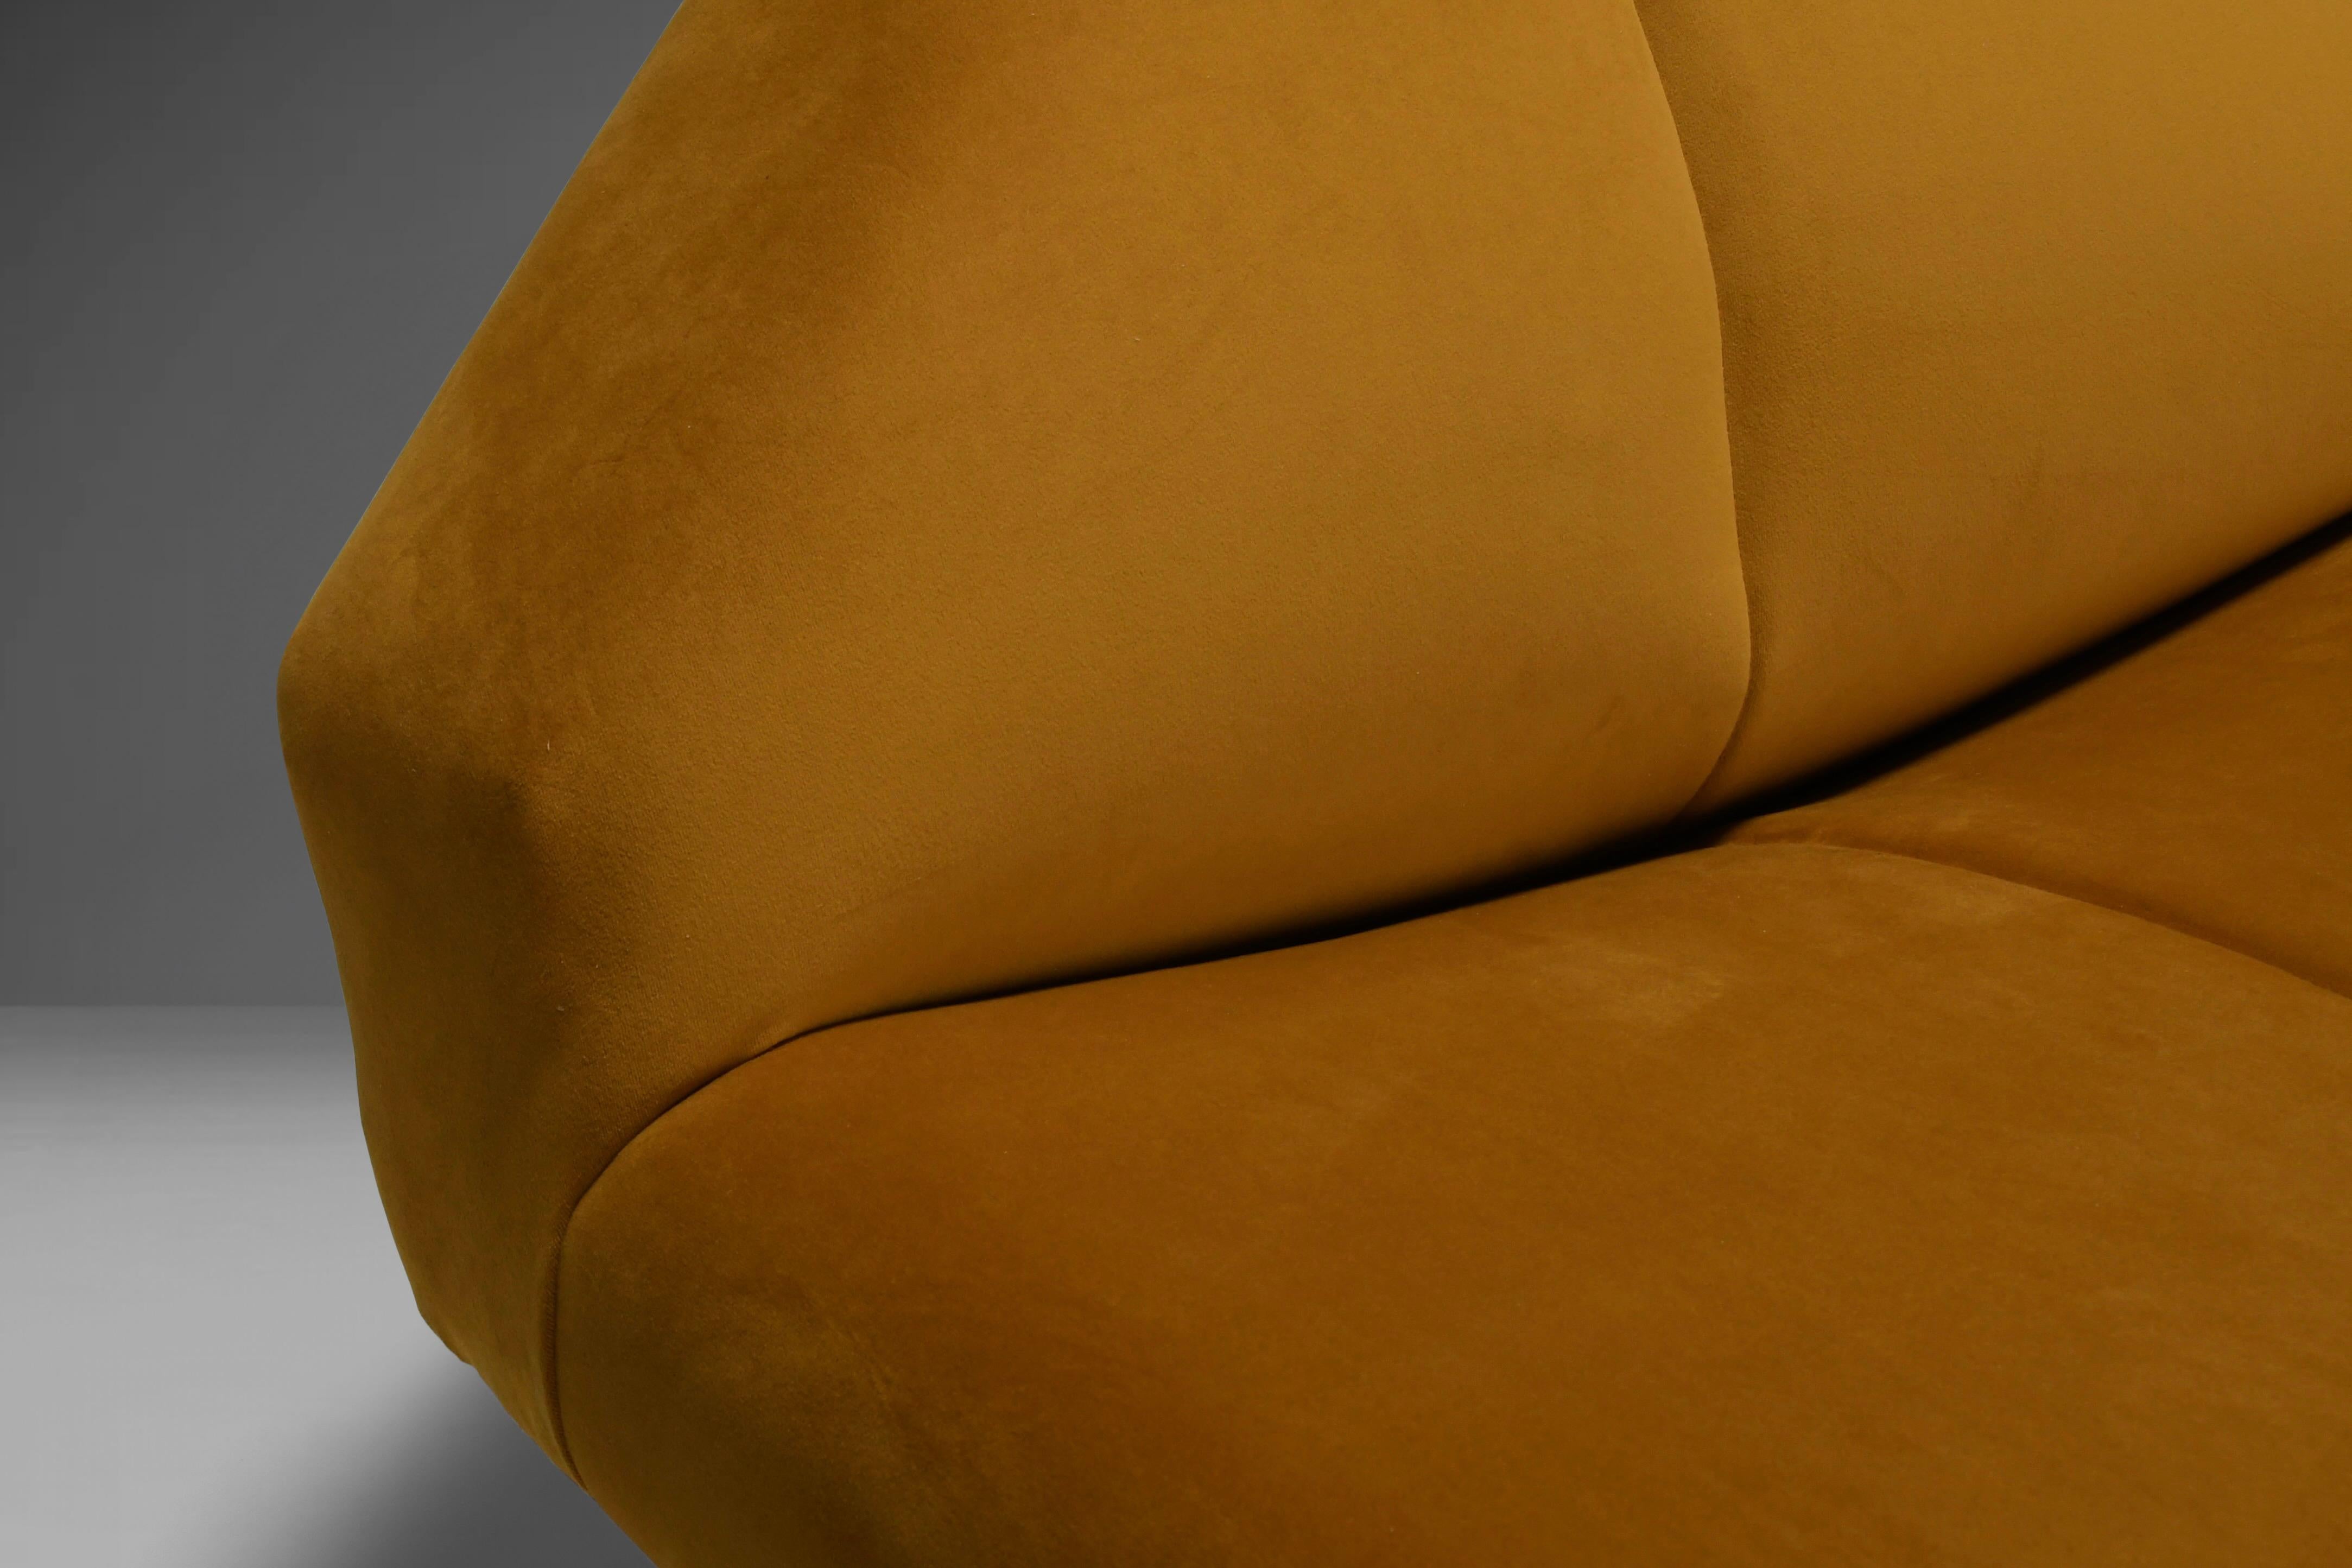 Metal Gold Ochre Fabric ‘Brasilia’ Lounge Chair by Schmieder, Denmark, 1960s For Sale